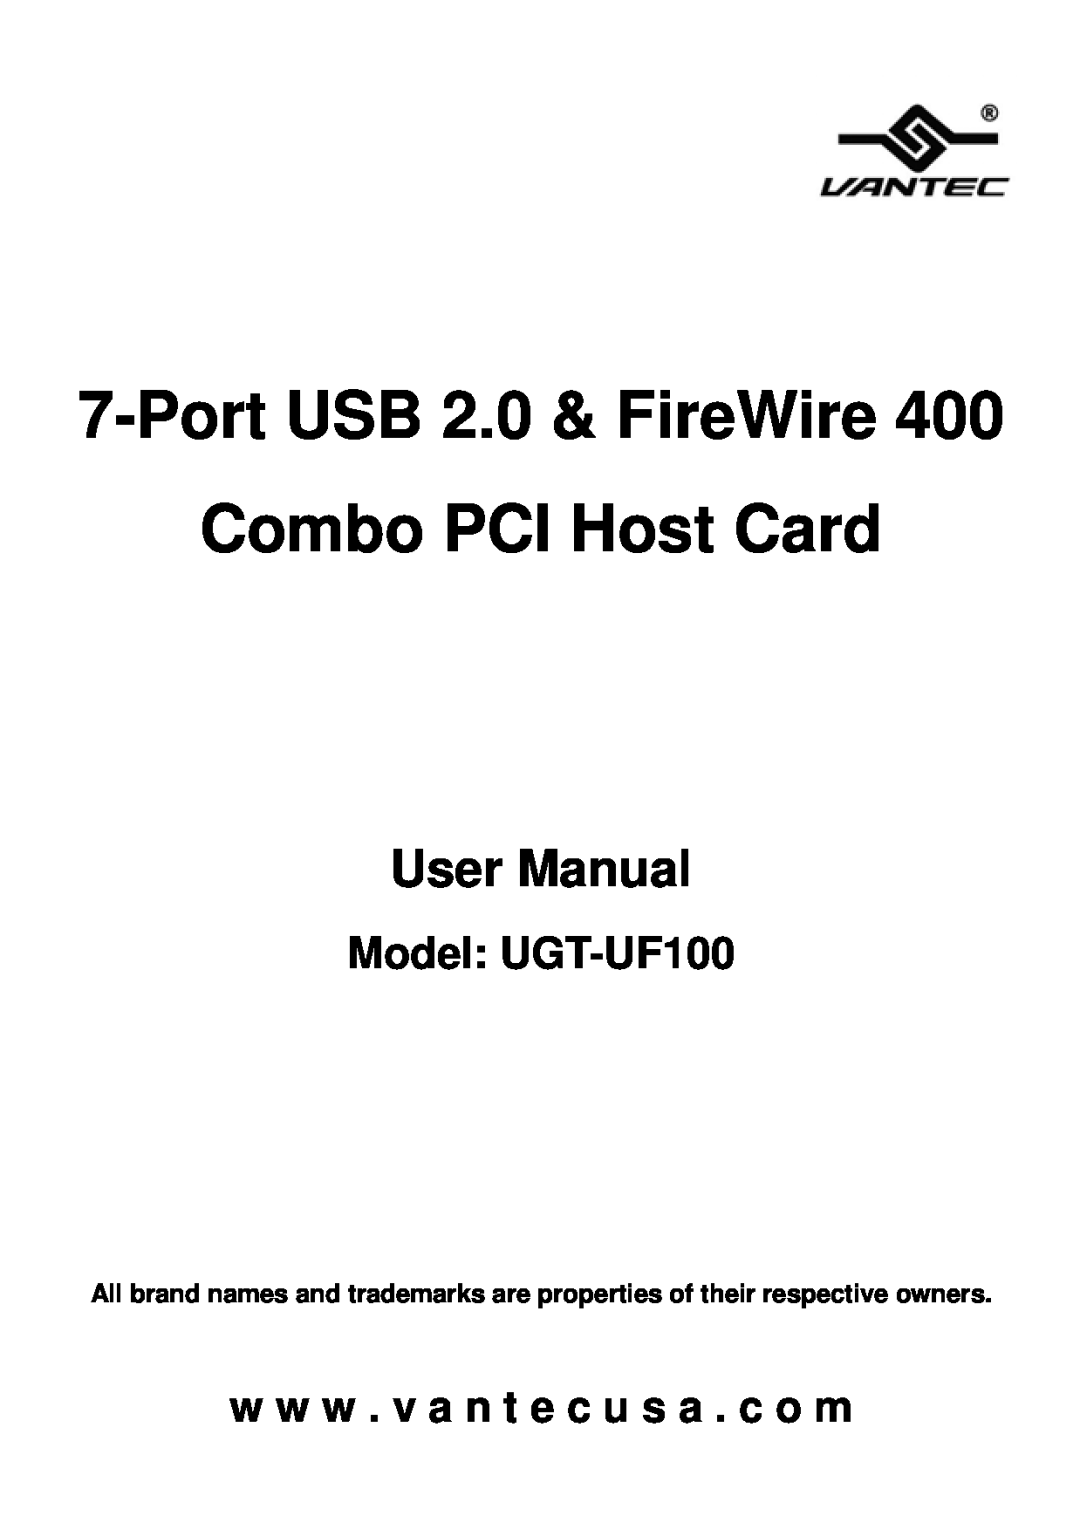 Vantec user manual Port USB 2.0 & FireWire, Combo PCI Host Card, User Manual, Model UGT-UF100 